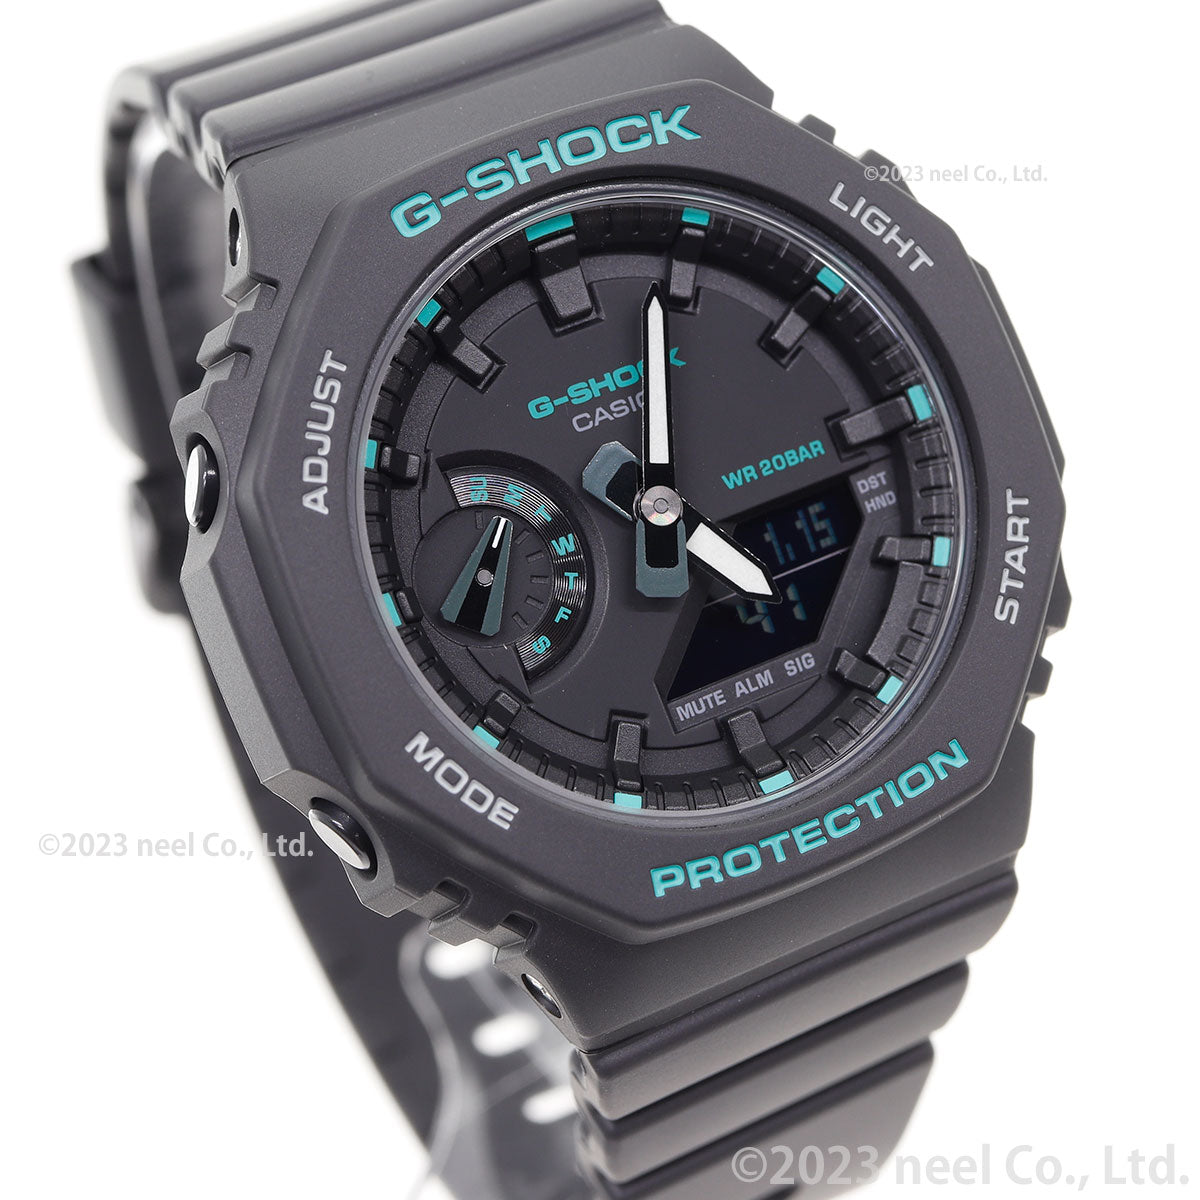 G-SHOCK カシオ Gショック CASIO アナデジ 腕時計 メンズ レディース GMA-S2100GA-1AJF GA-2100 小型化・薄型化モデル